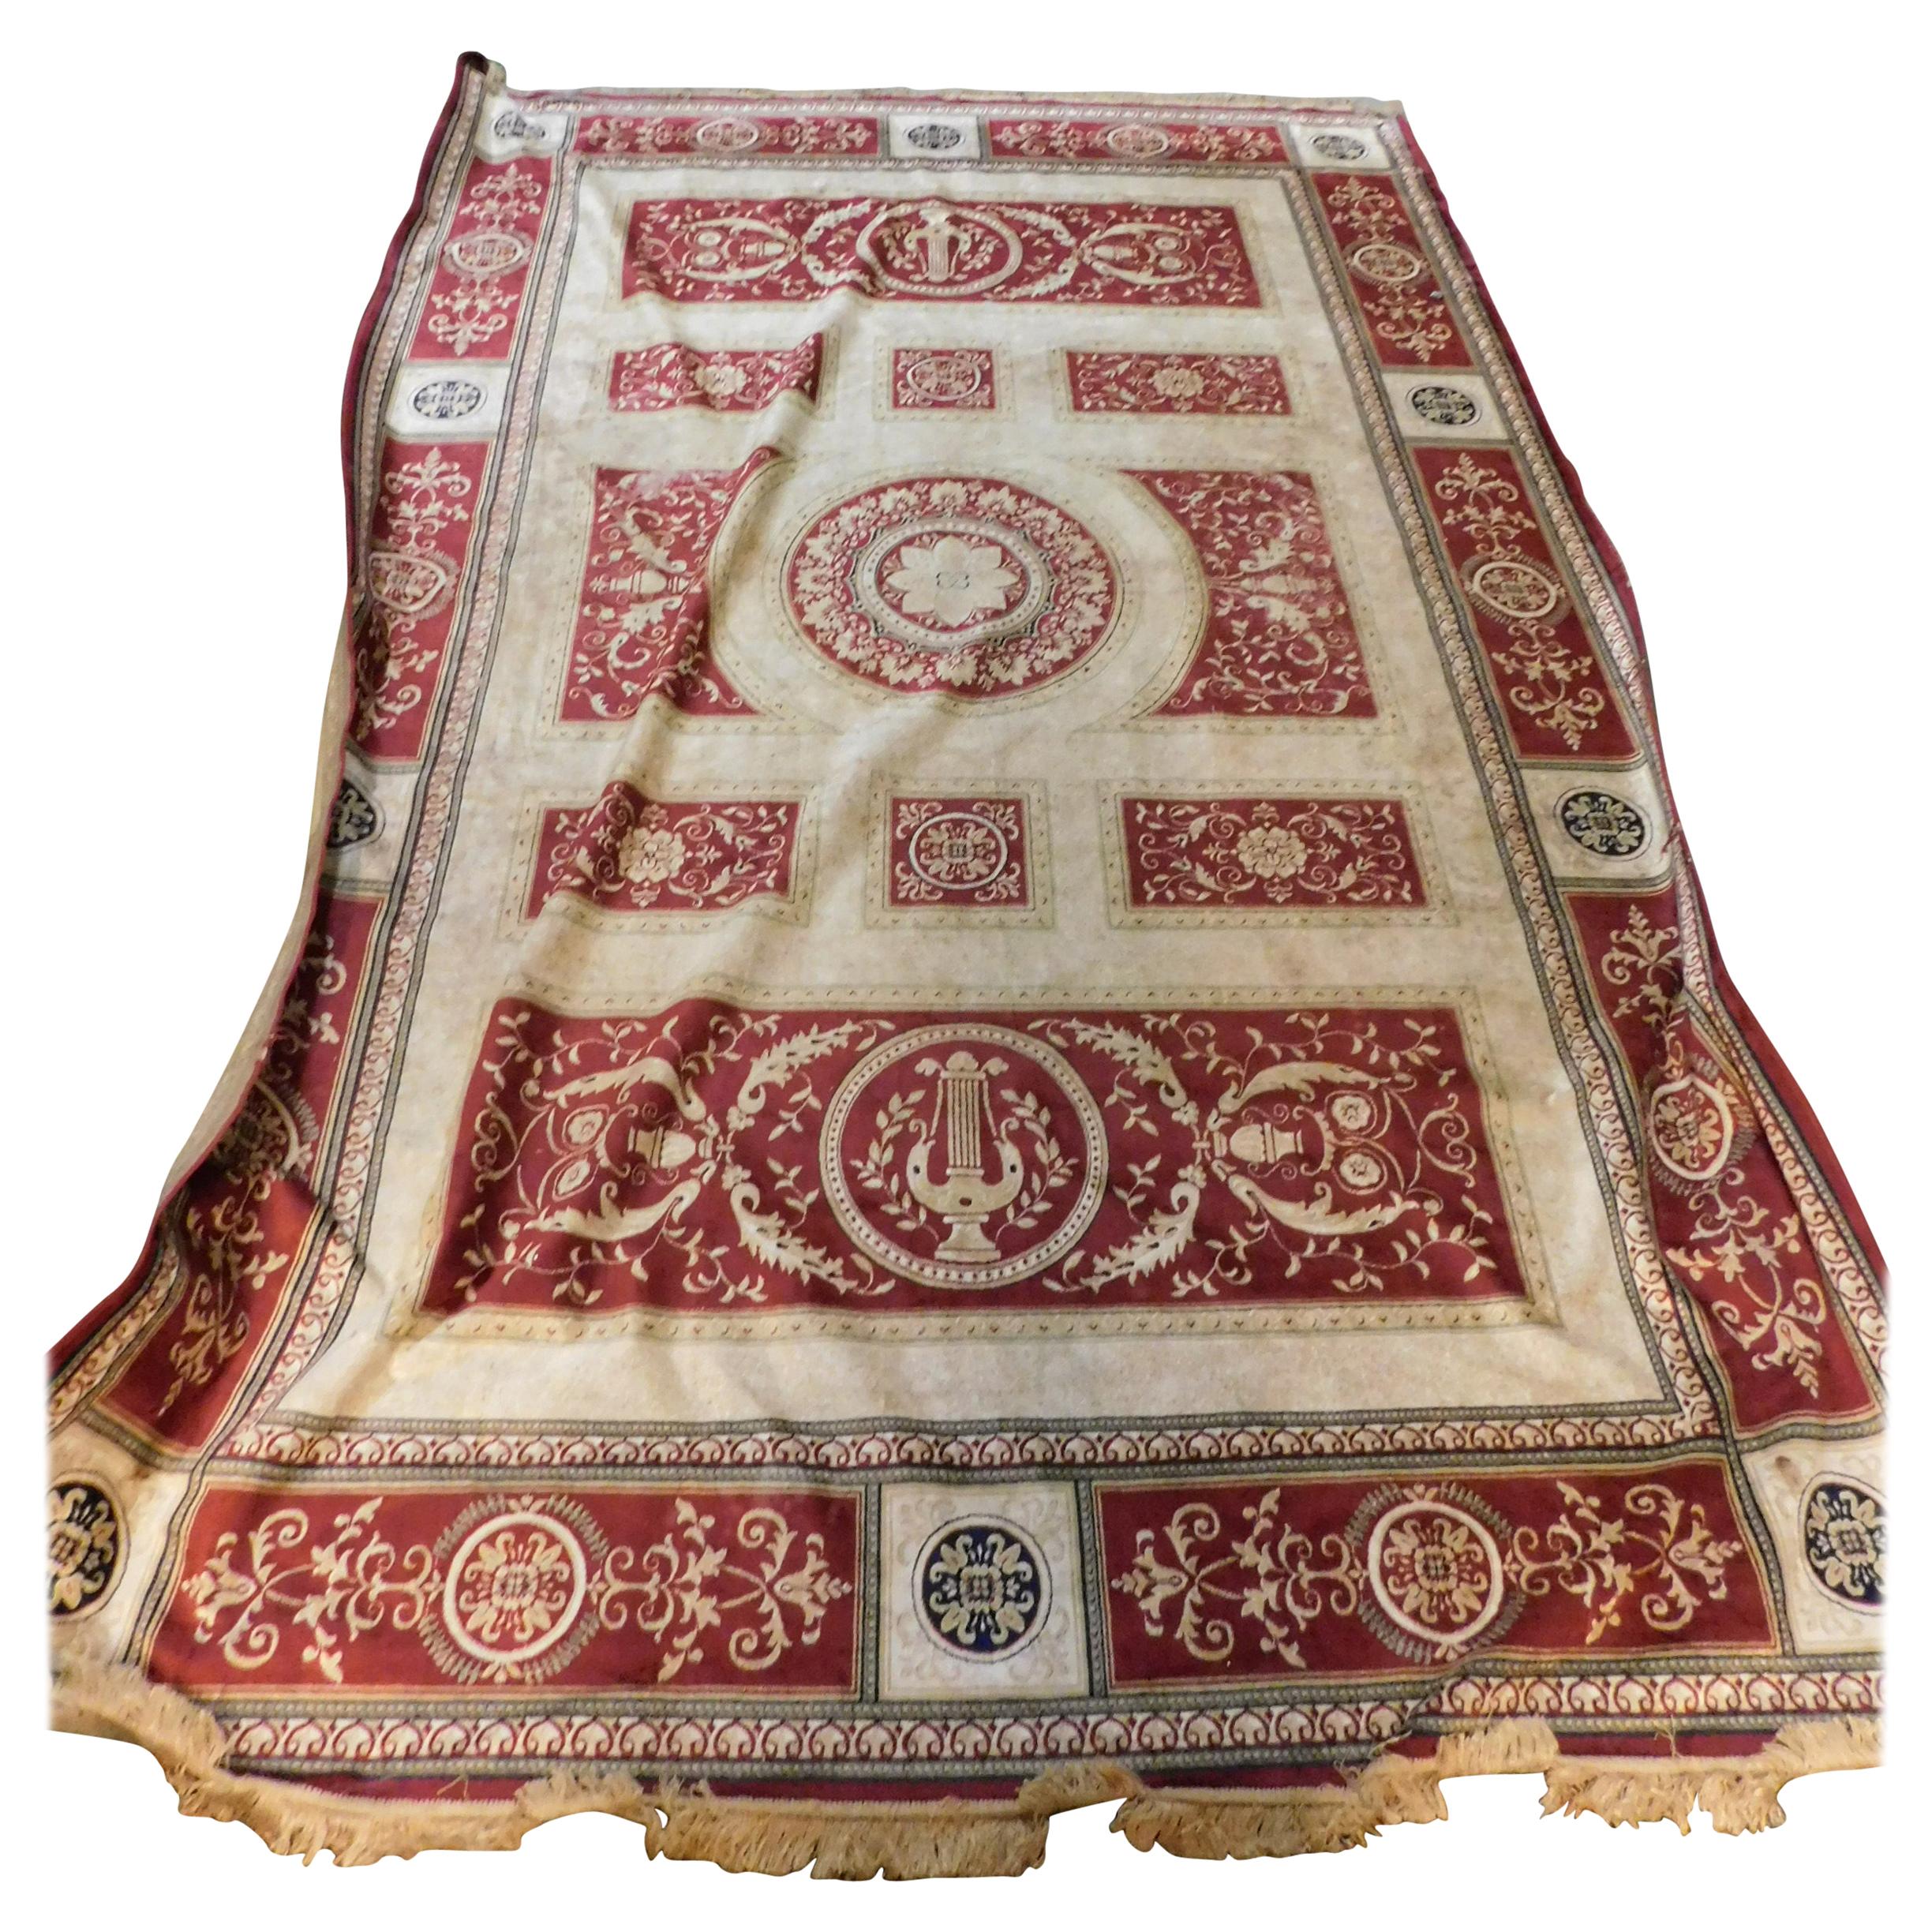 Antique Silk Carpet Red Beige, Neoclassical, 1800, Europe